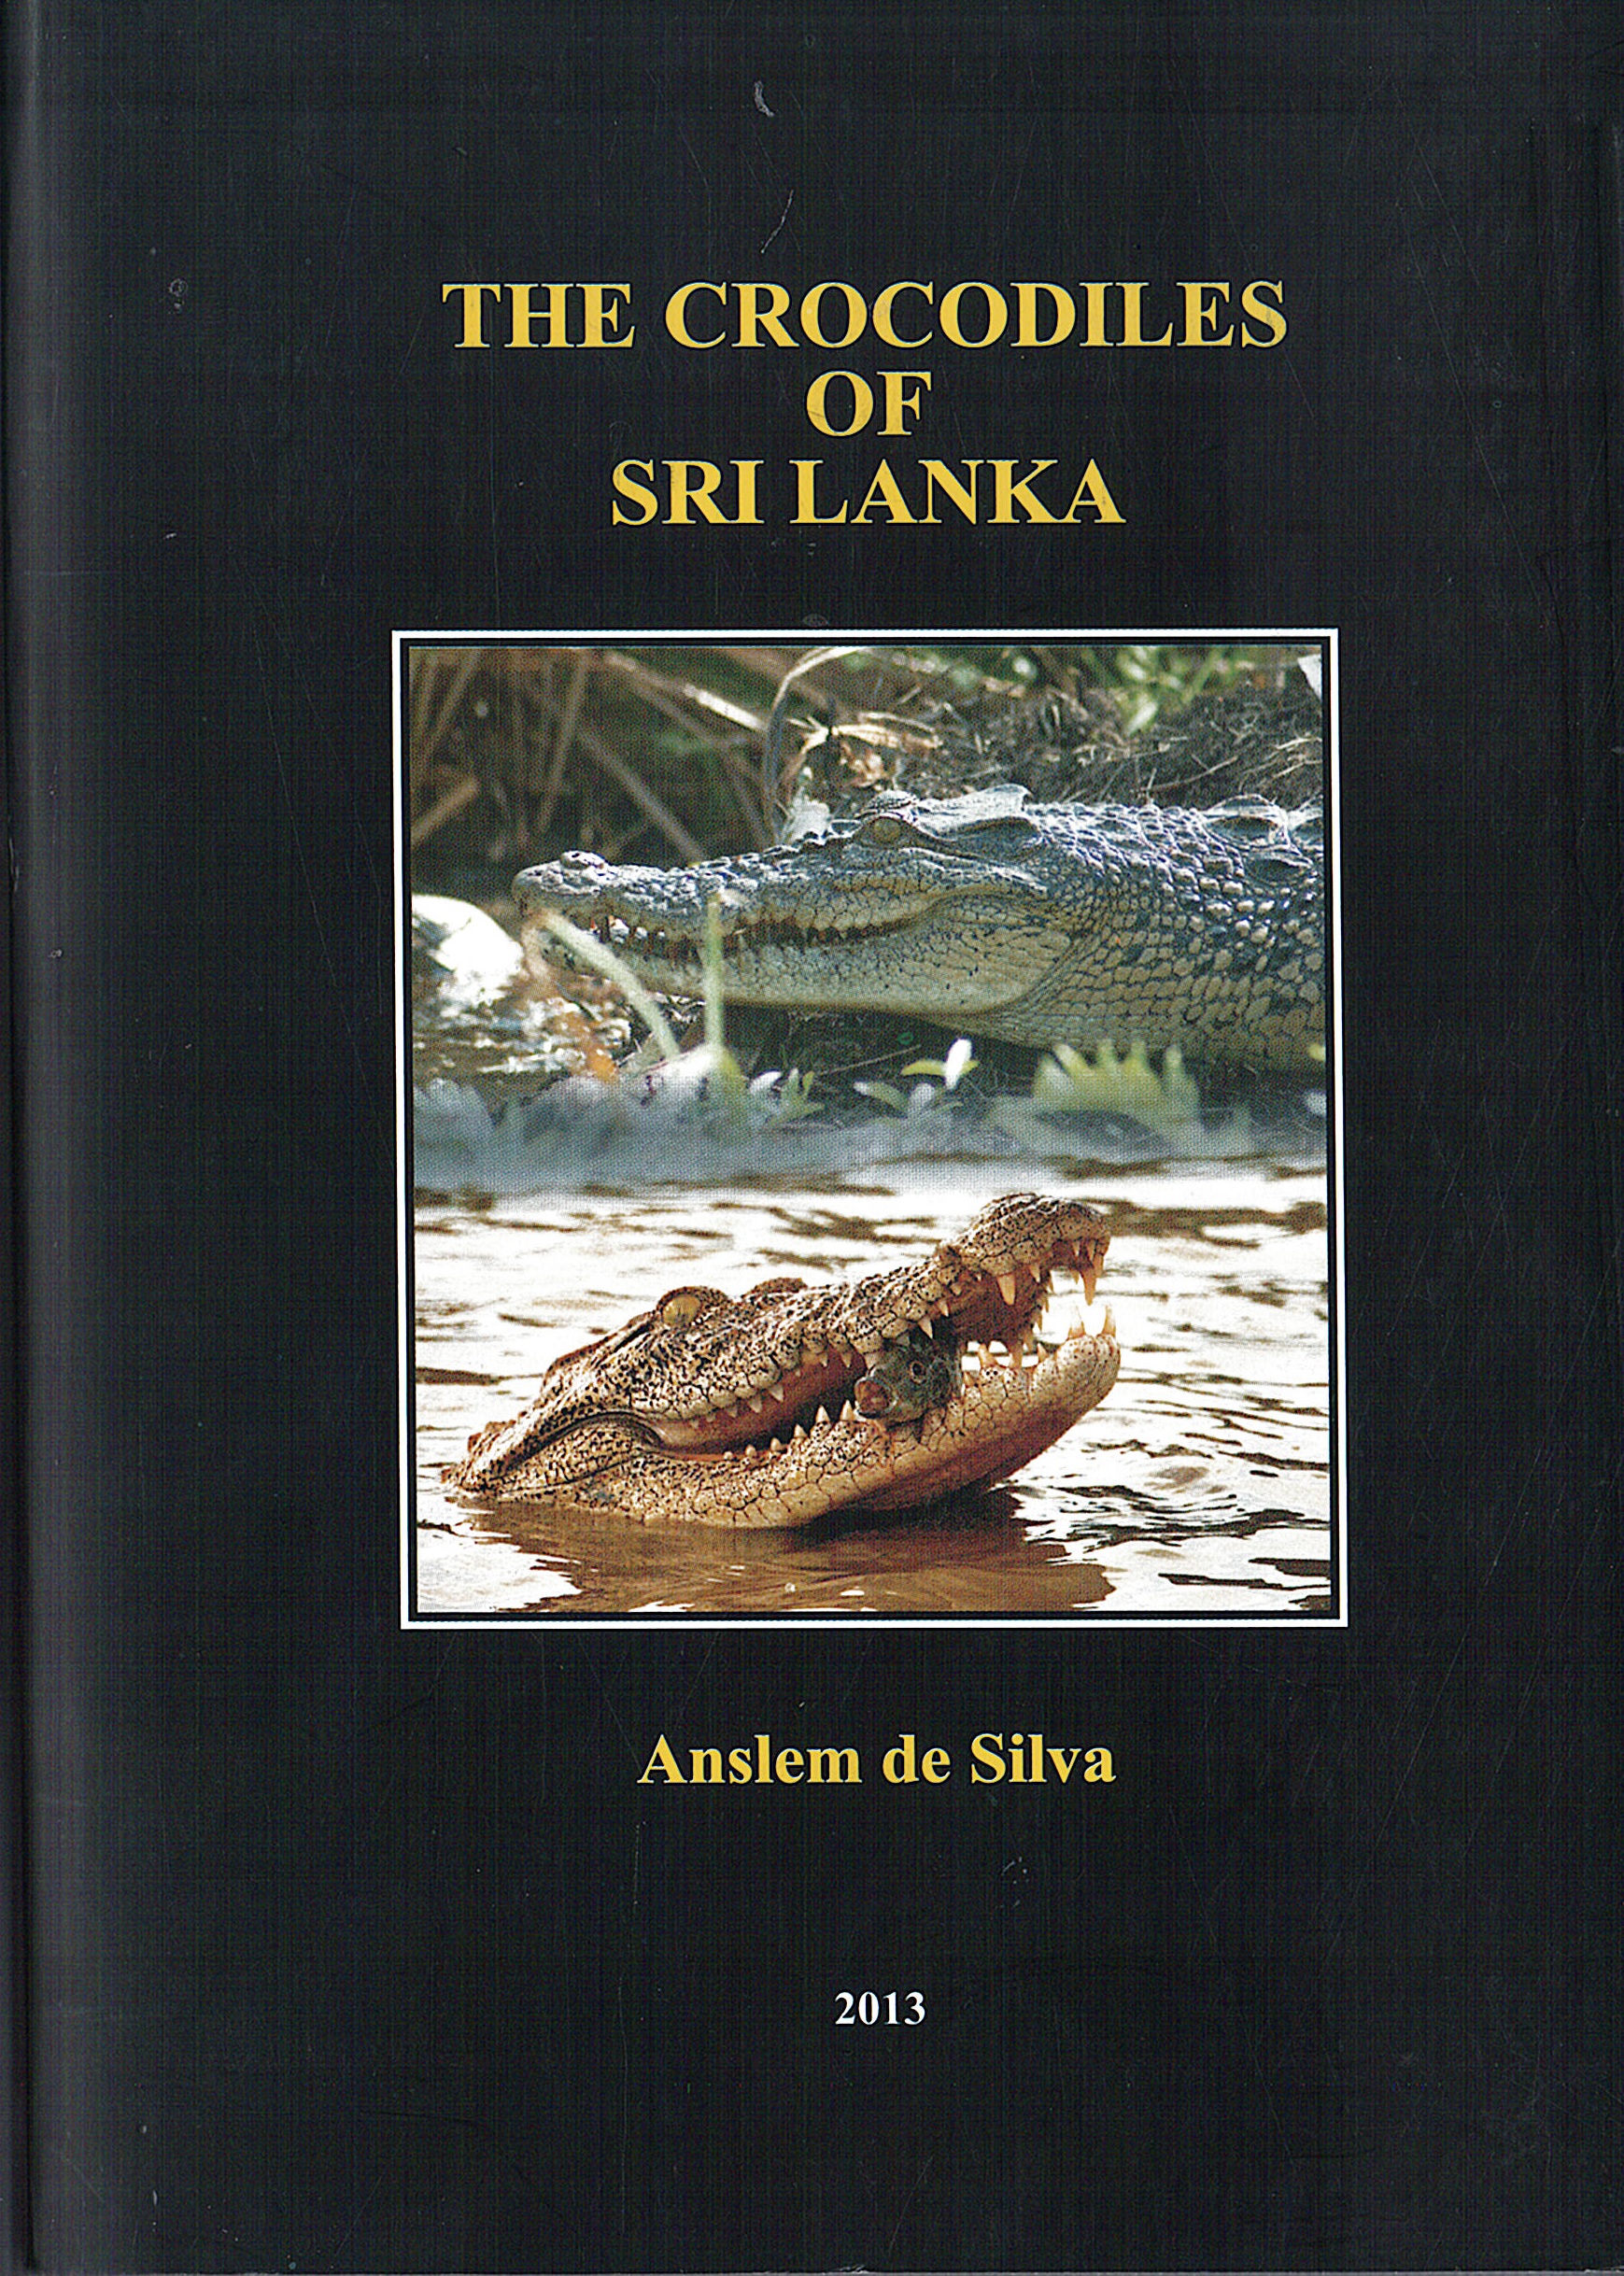 The Crocodiles of Sri Lanka